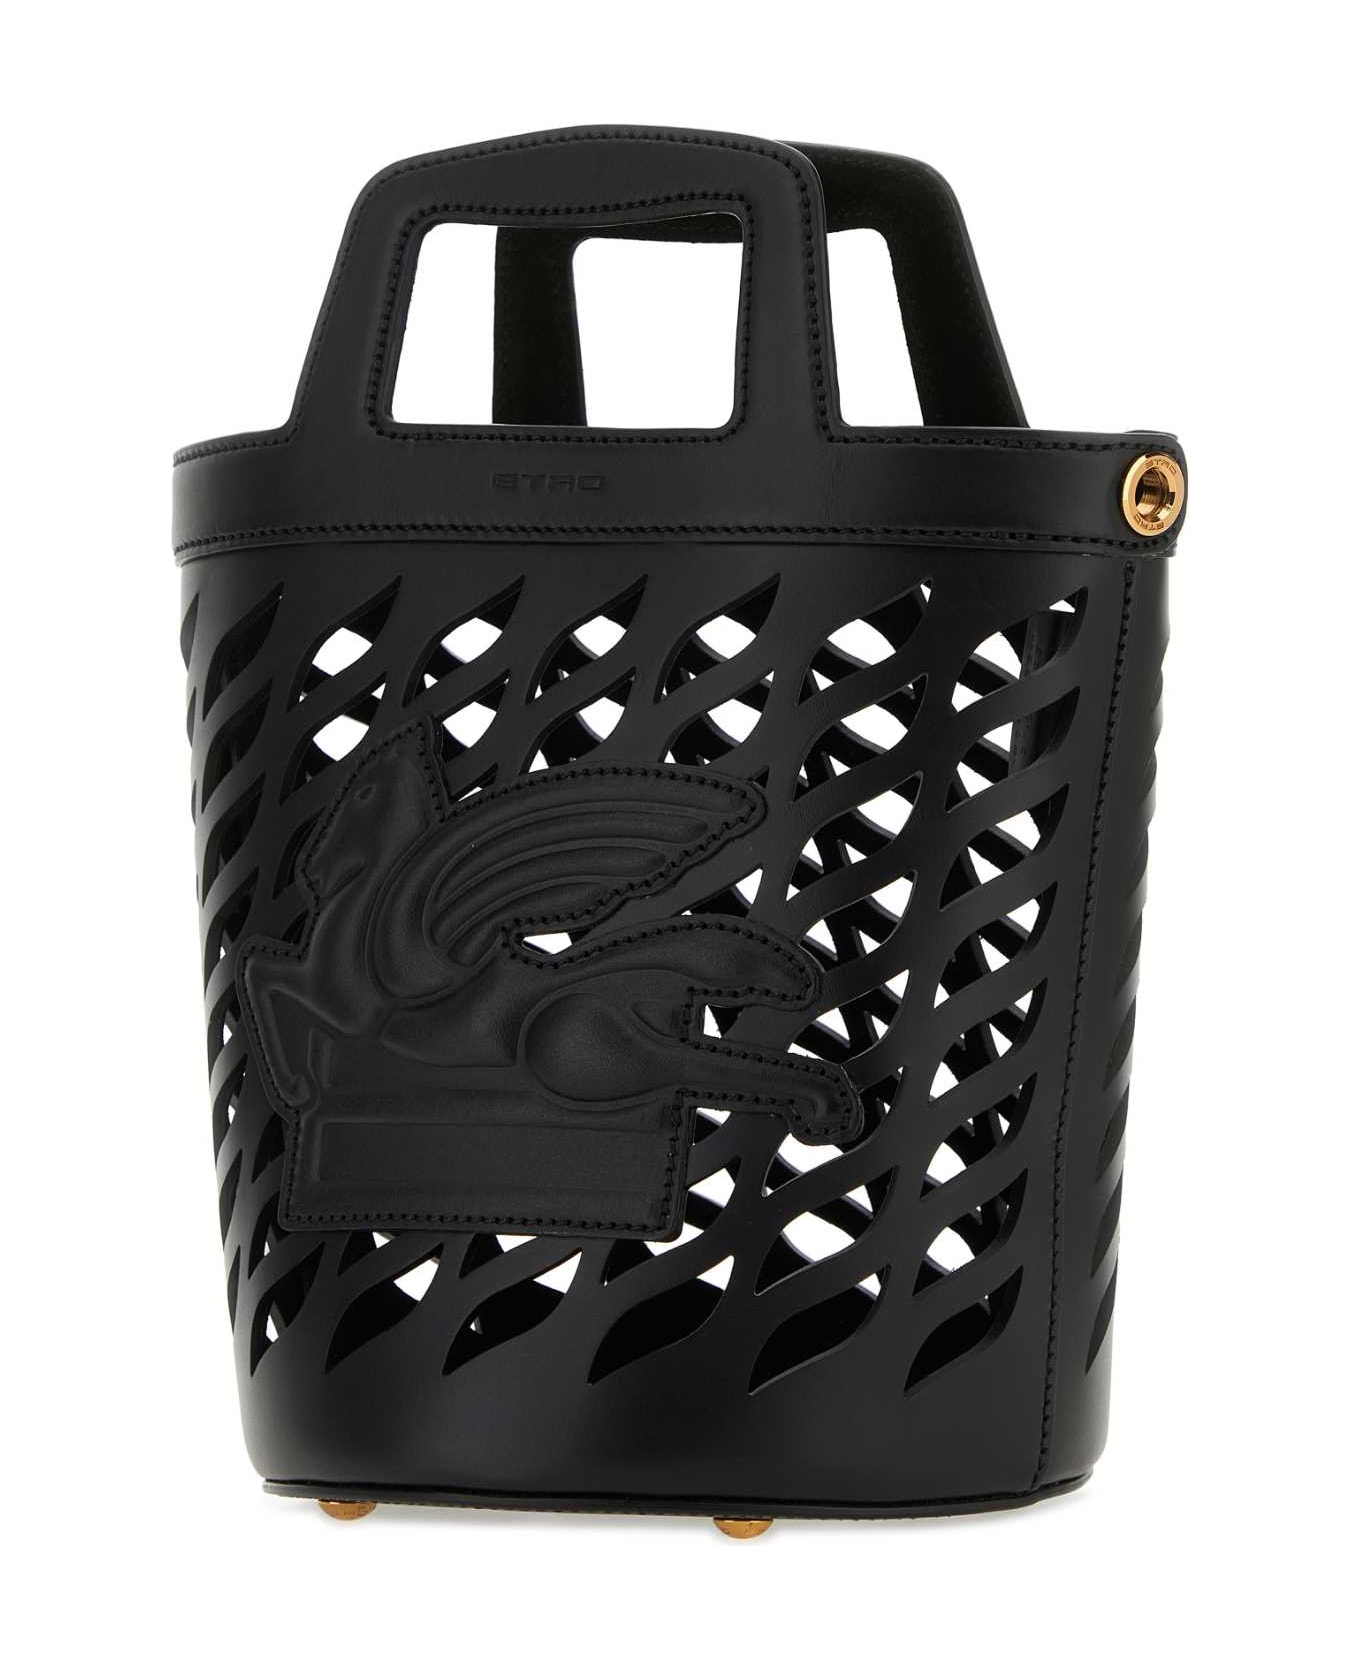 Etro Black Leather Coffa Bucket Bag - 1 トートバッグ